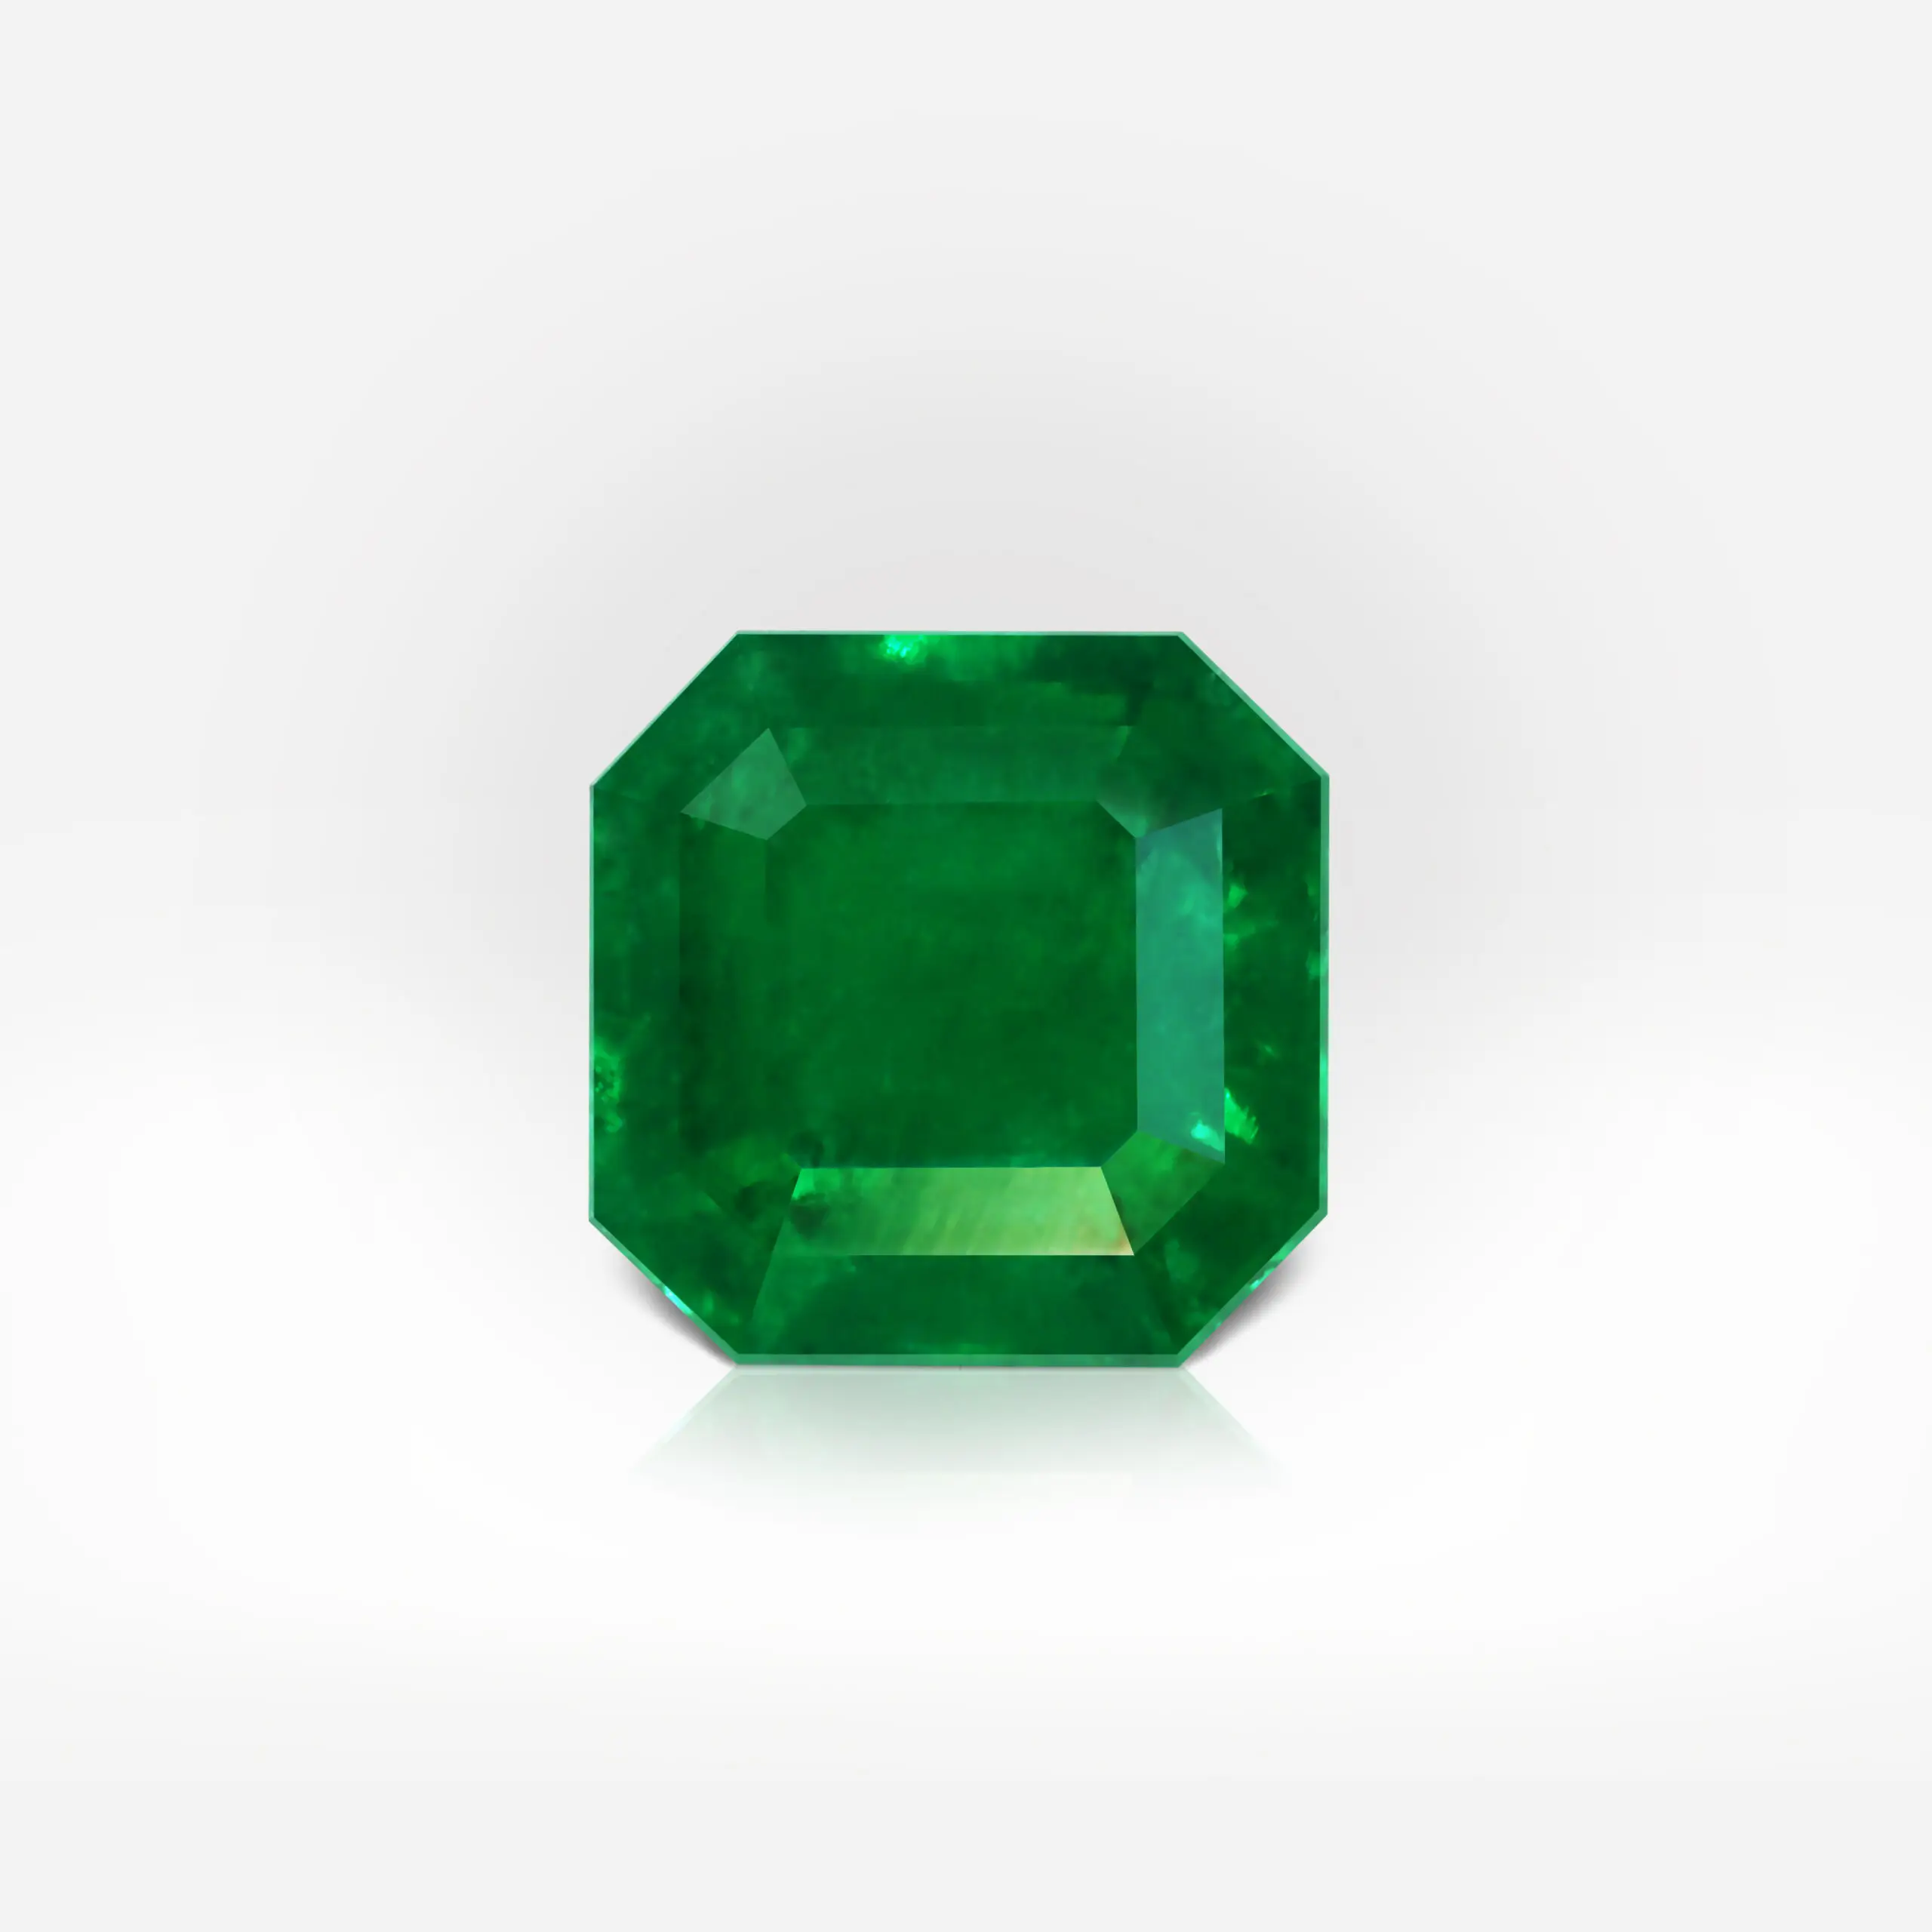 3.18 carat Octagonal Shape Intense Green Emerald CGL - picture 1